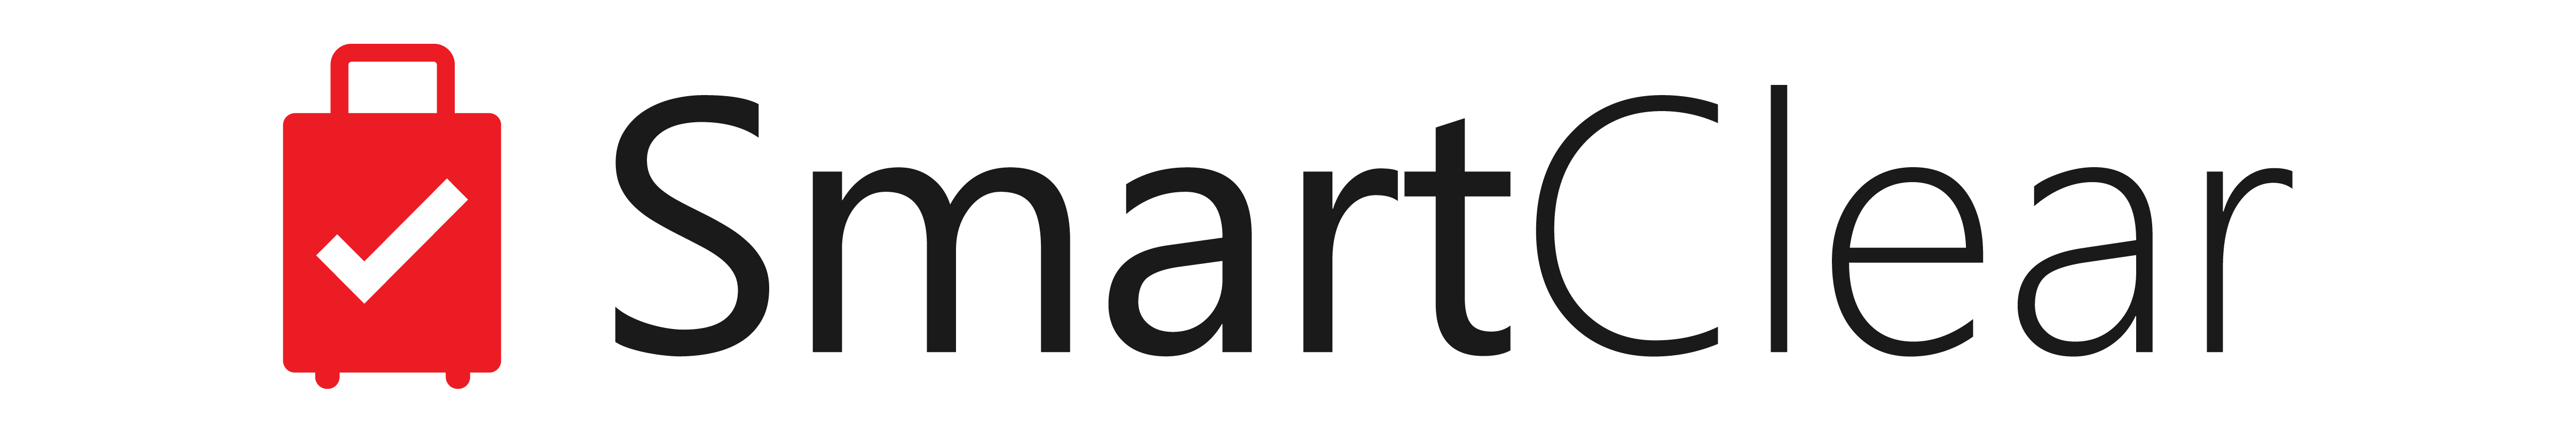 SmartSuite Enterprise Logo Red